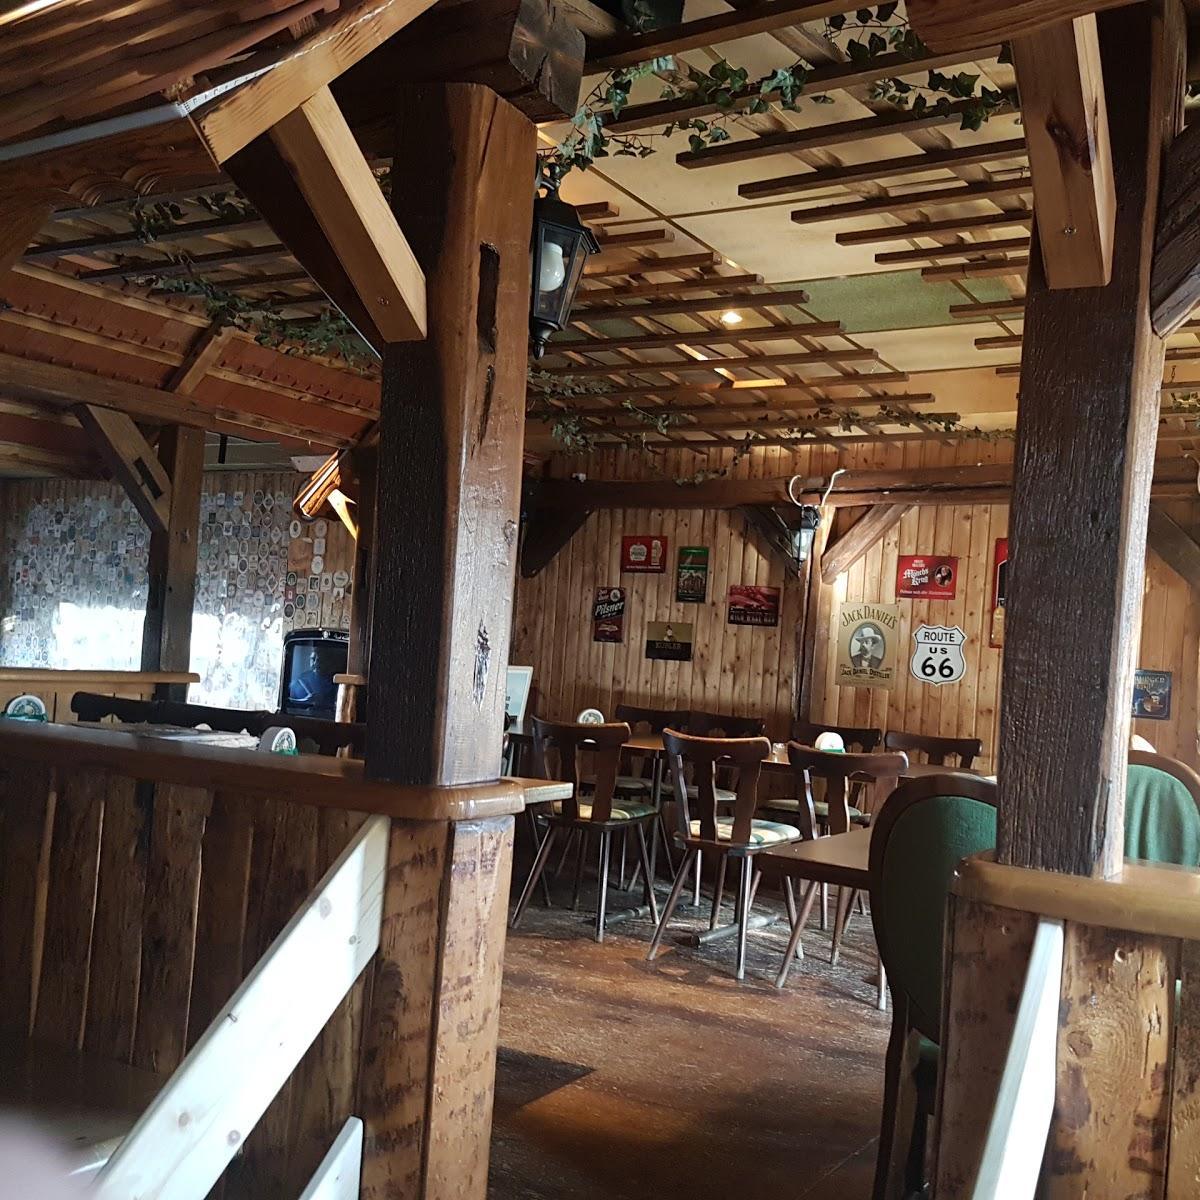 Restaurant "Bierdeckel" in Sankt Leon-Rot